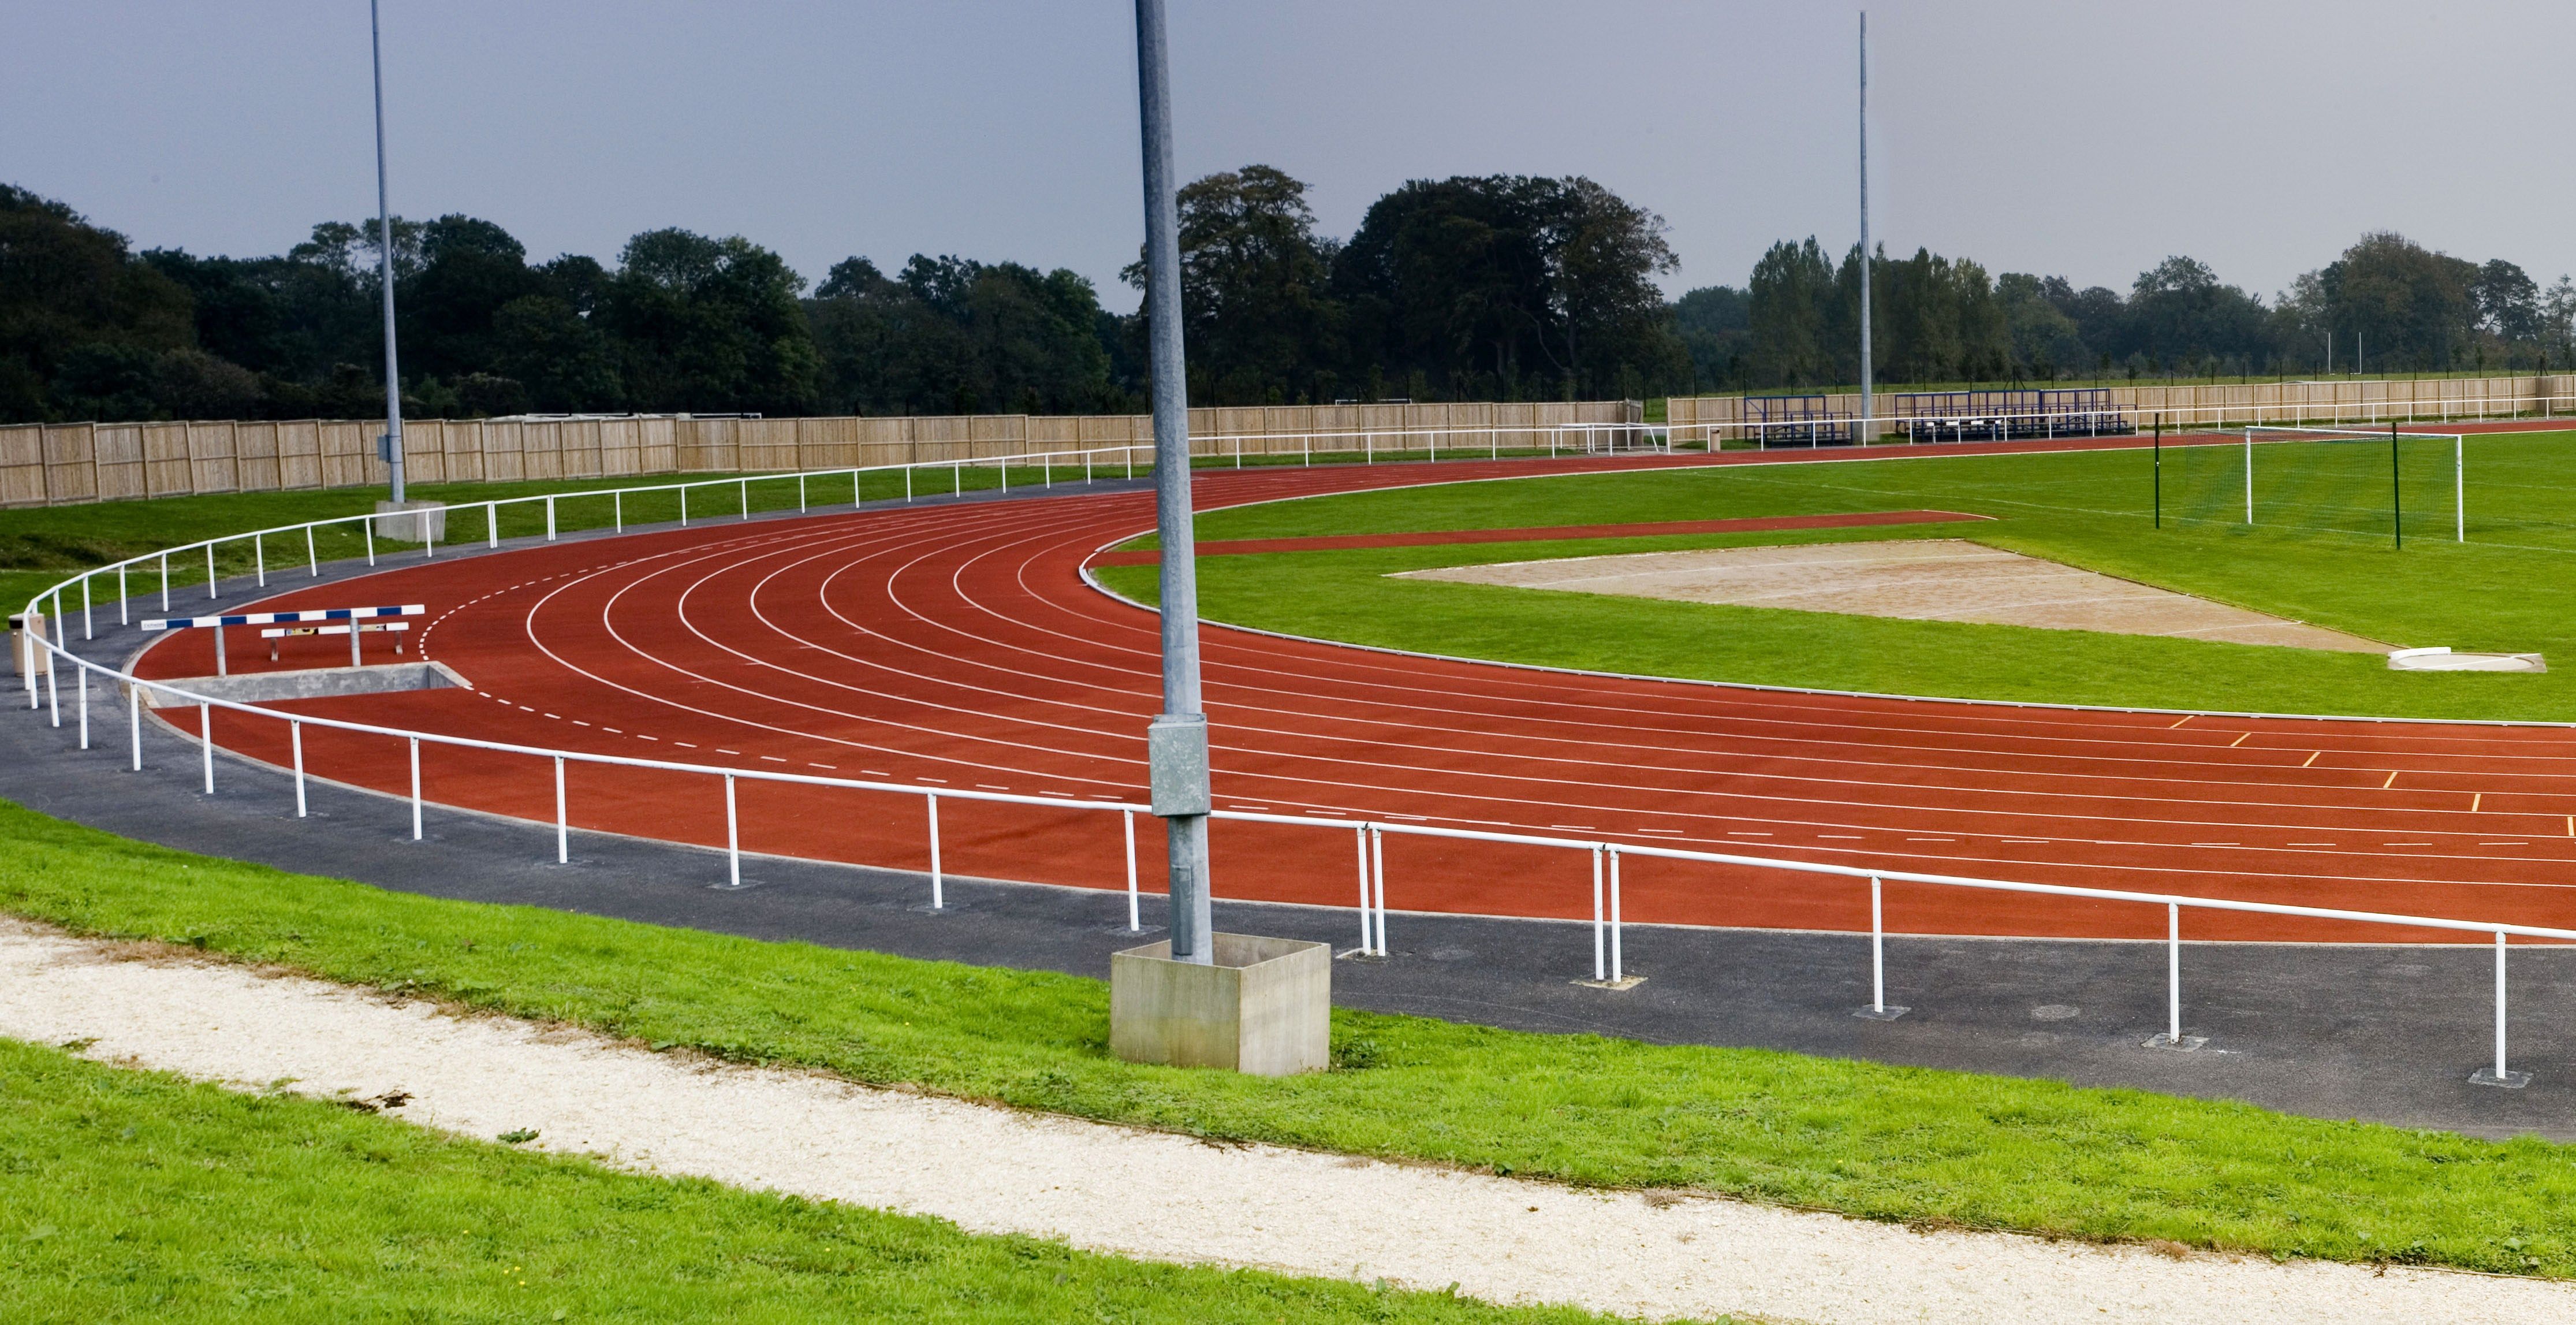 Outdoor athletics track